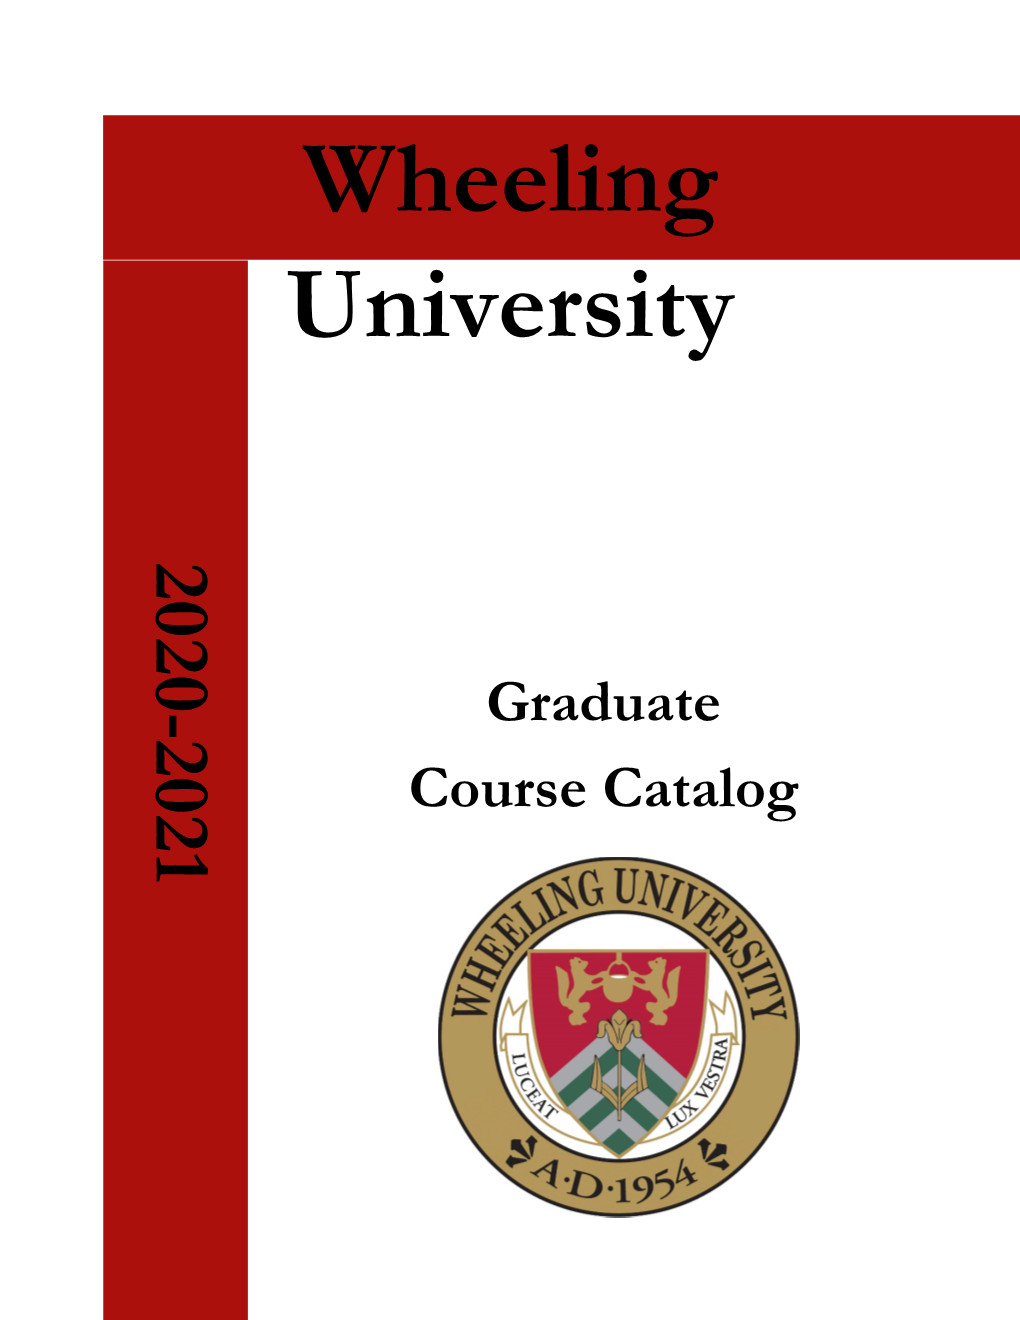 Graduate Course Catalog